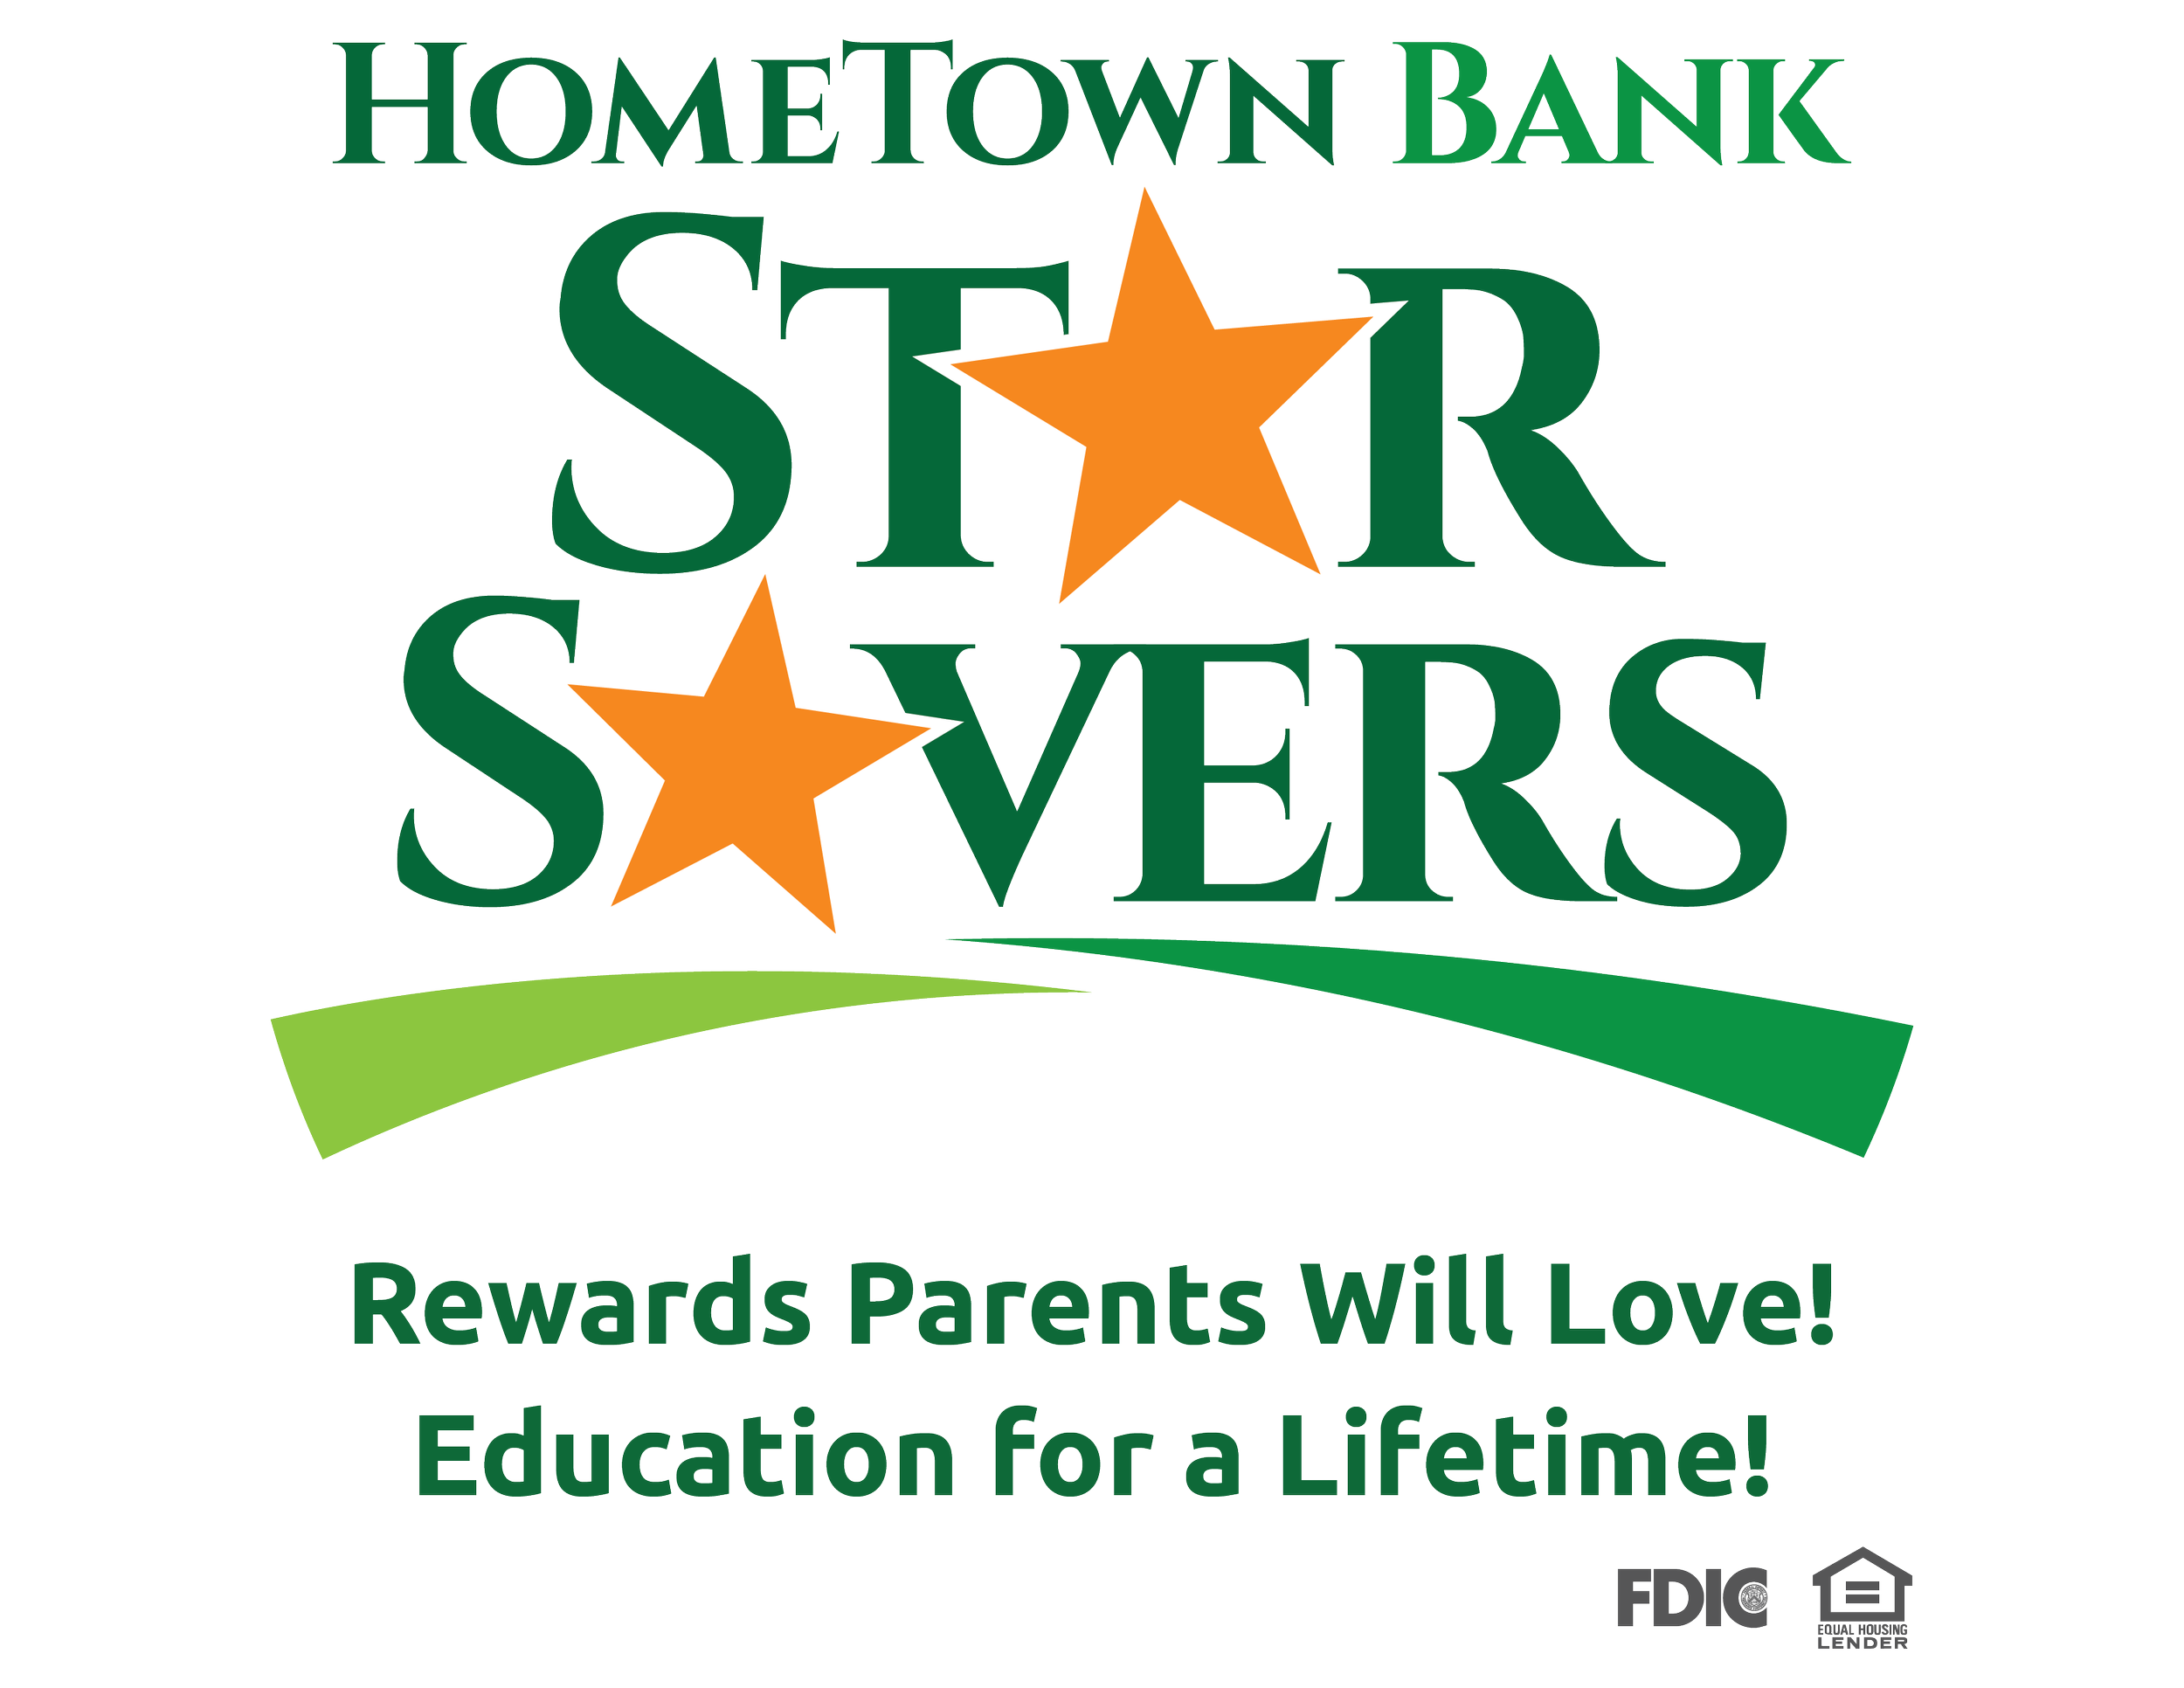 Hometown Bank Star Savers Logo Vertical Slogan-01.png